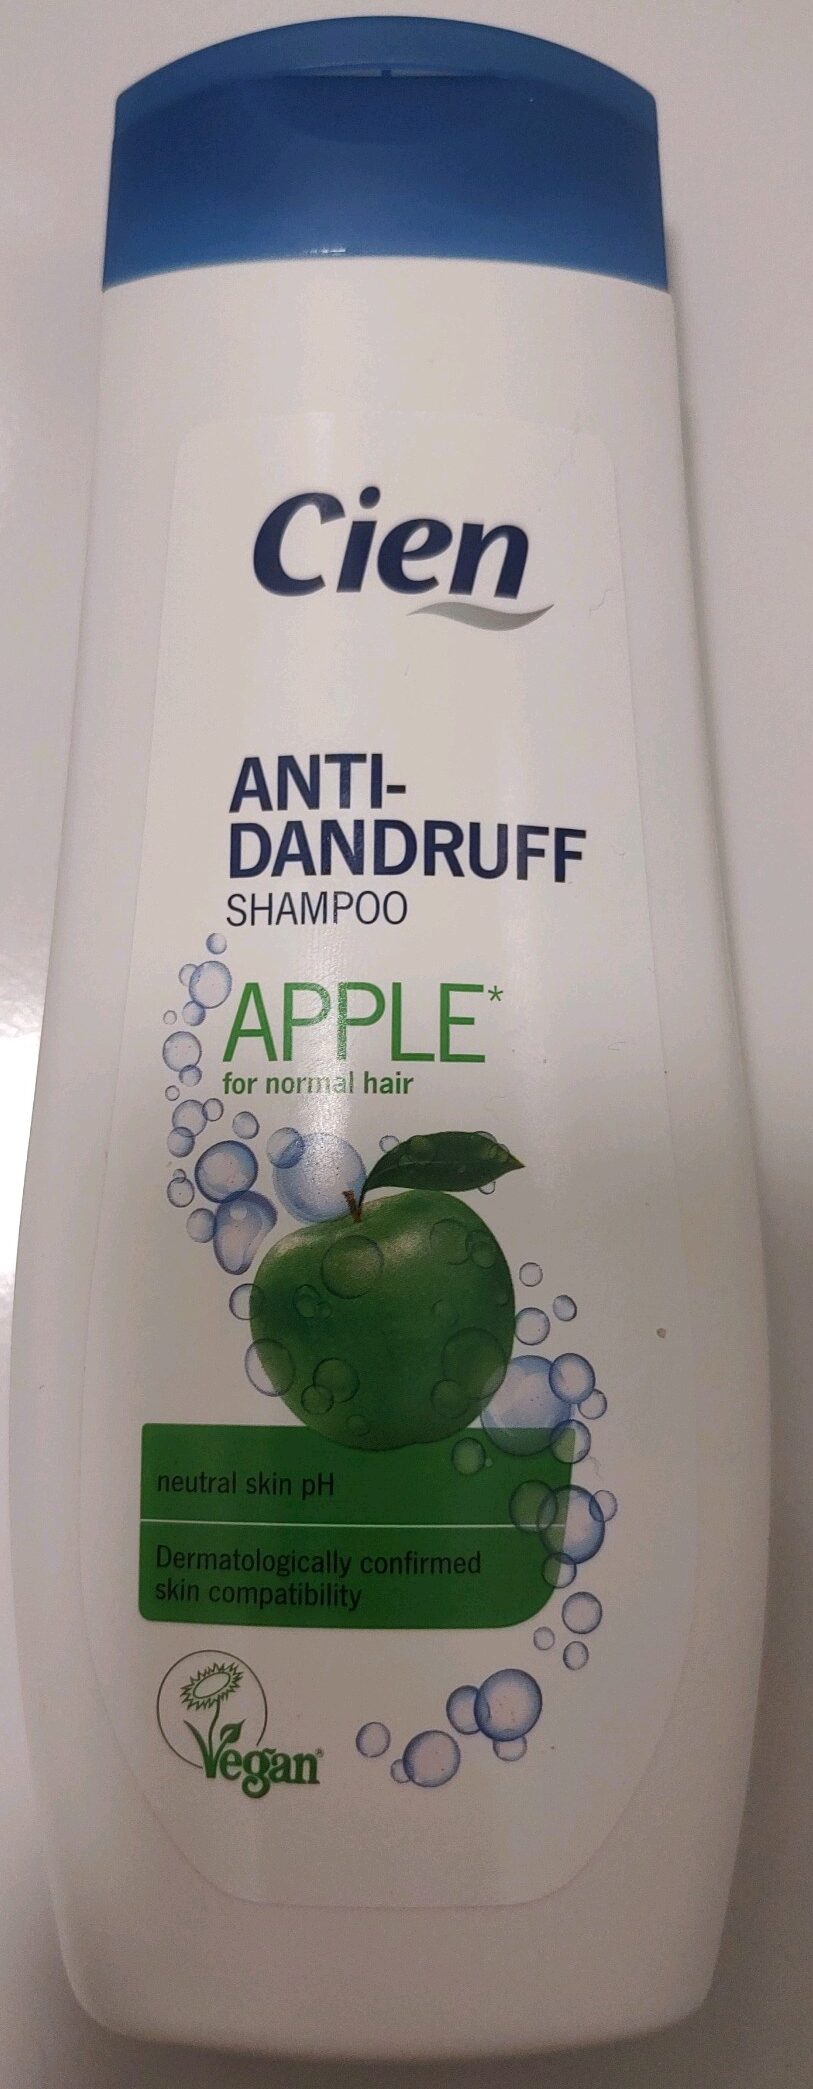 Anti Dandruff Shampoo - Product - en